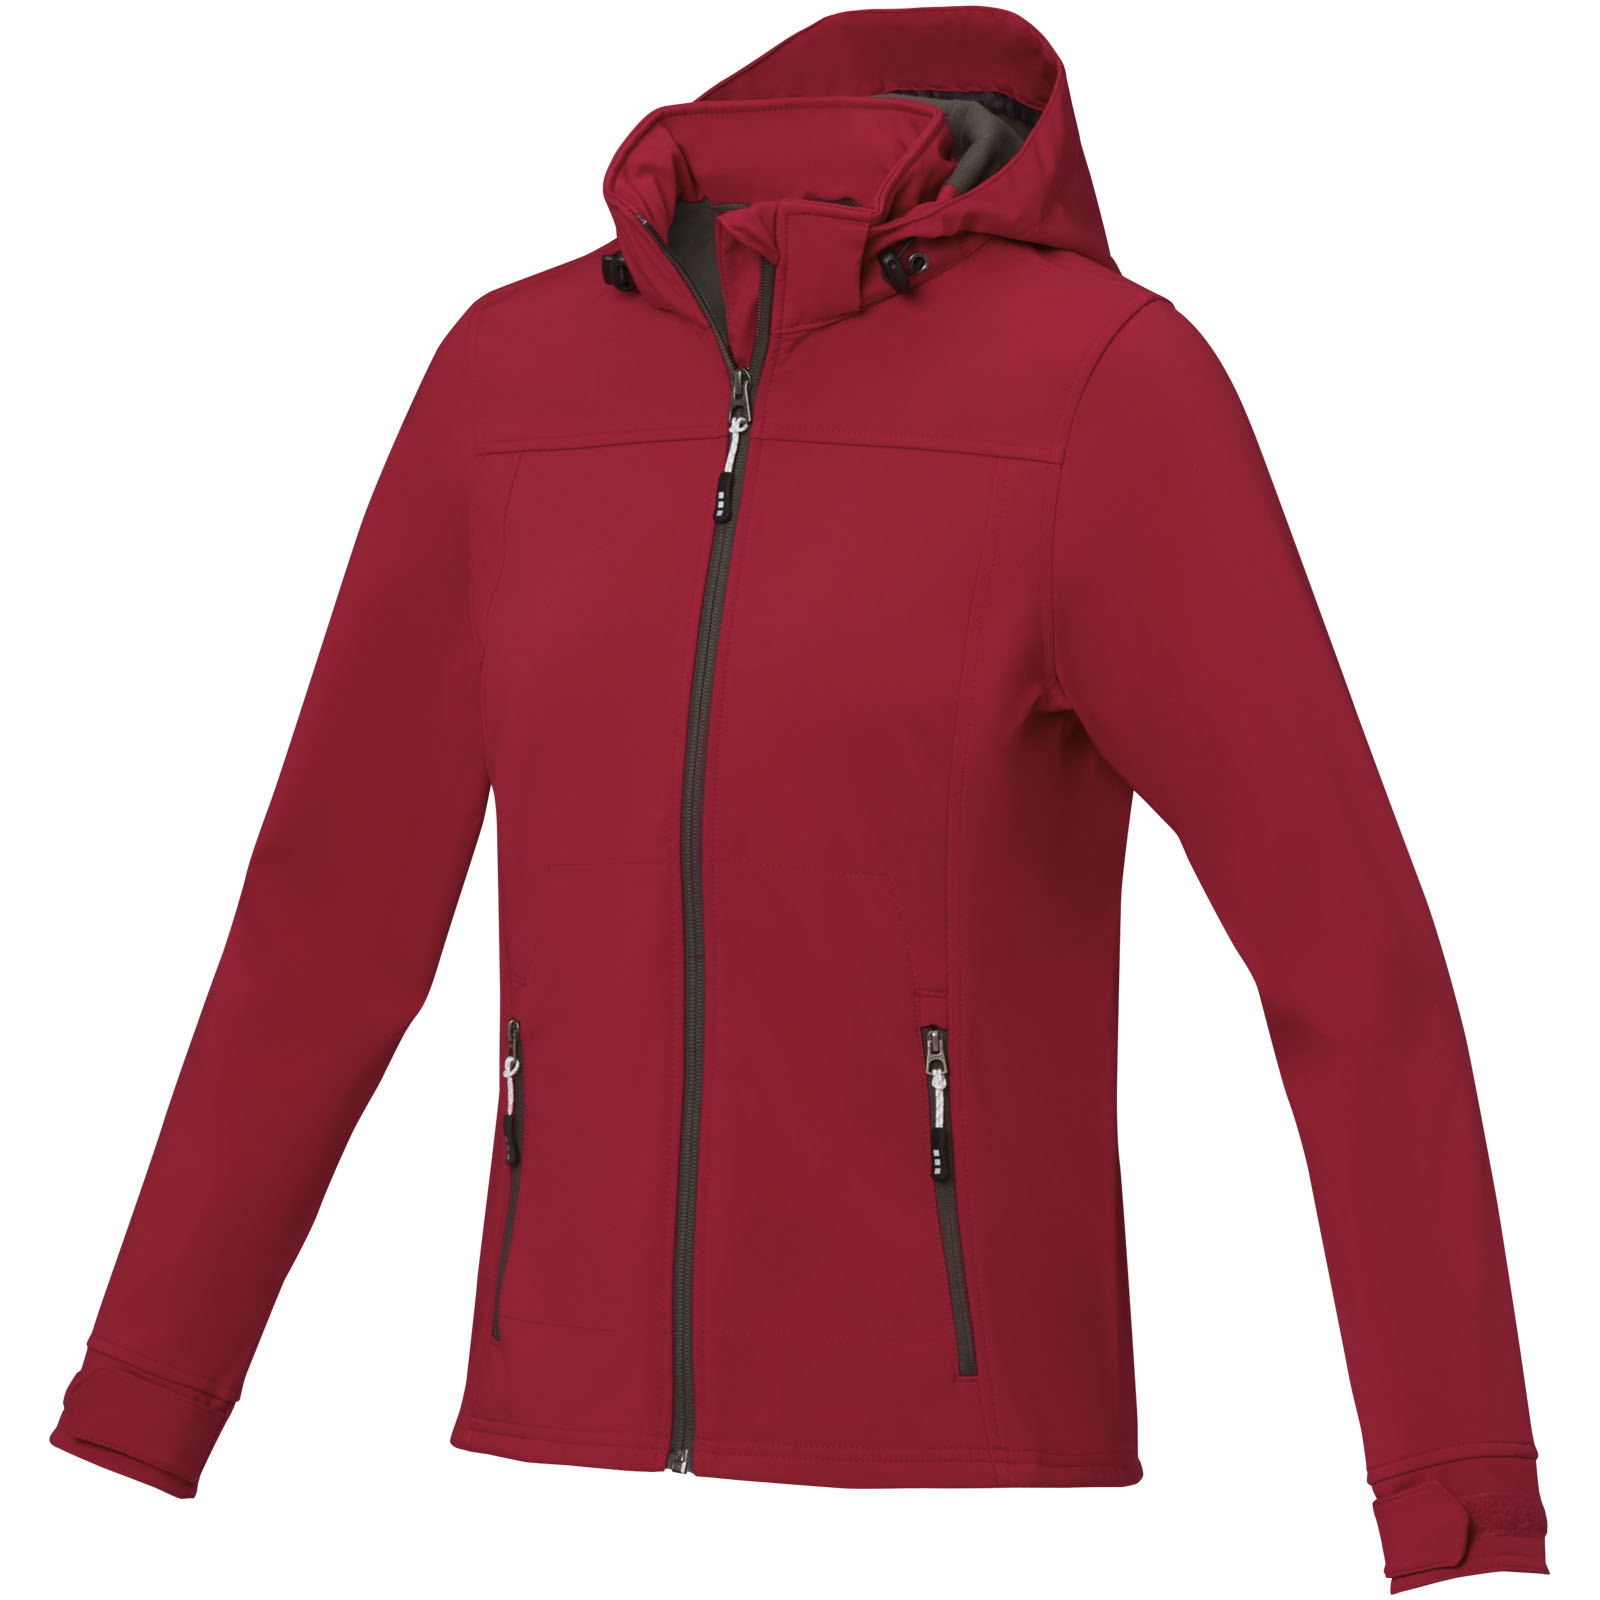 Advertising Jackets - Langley women's softshell jacket